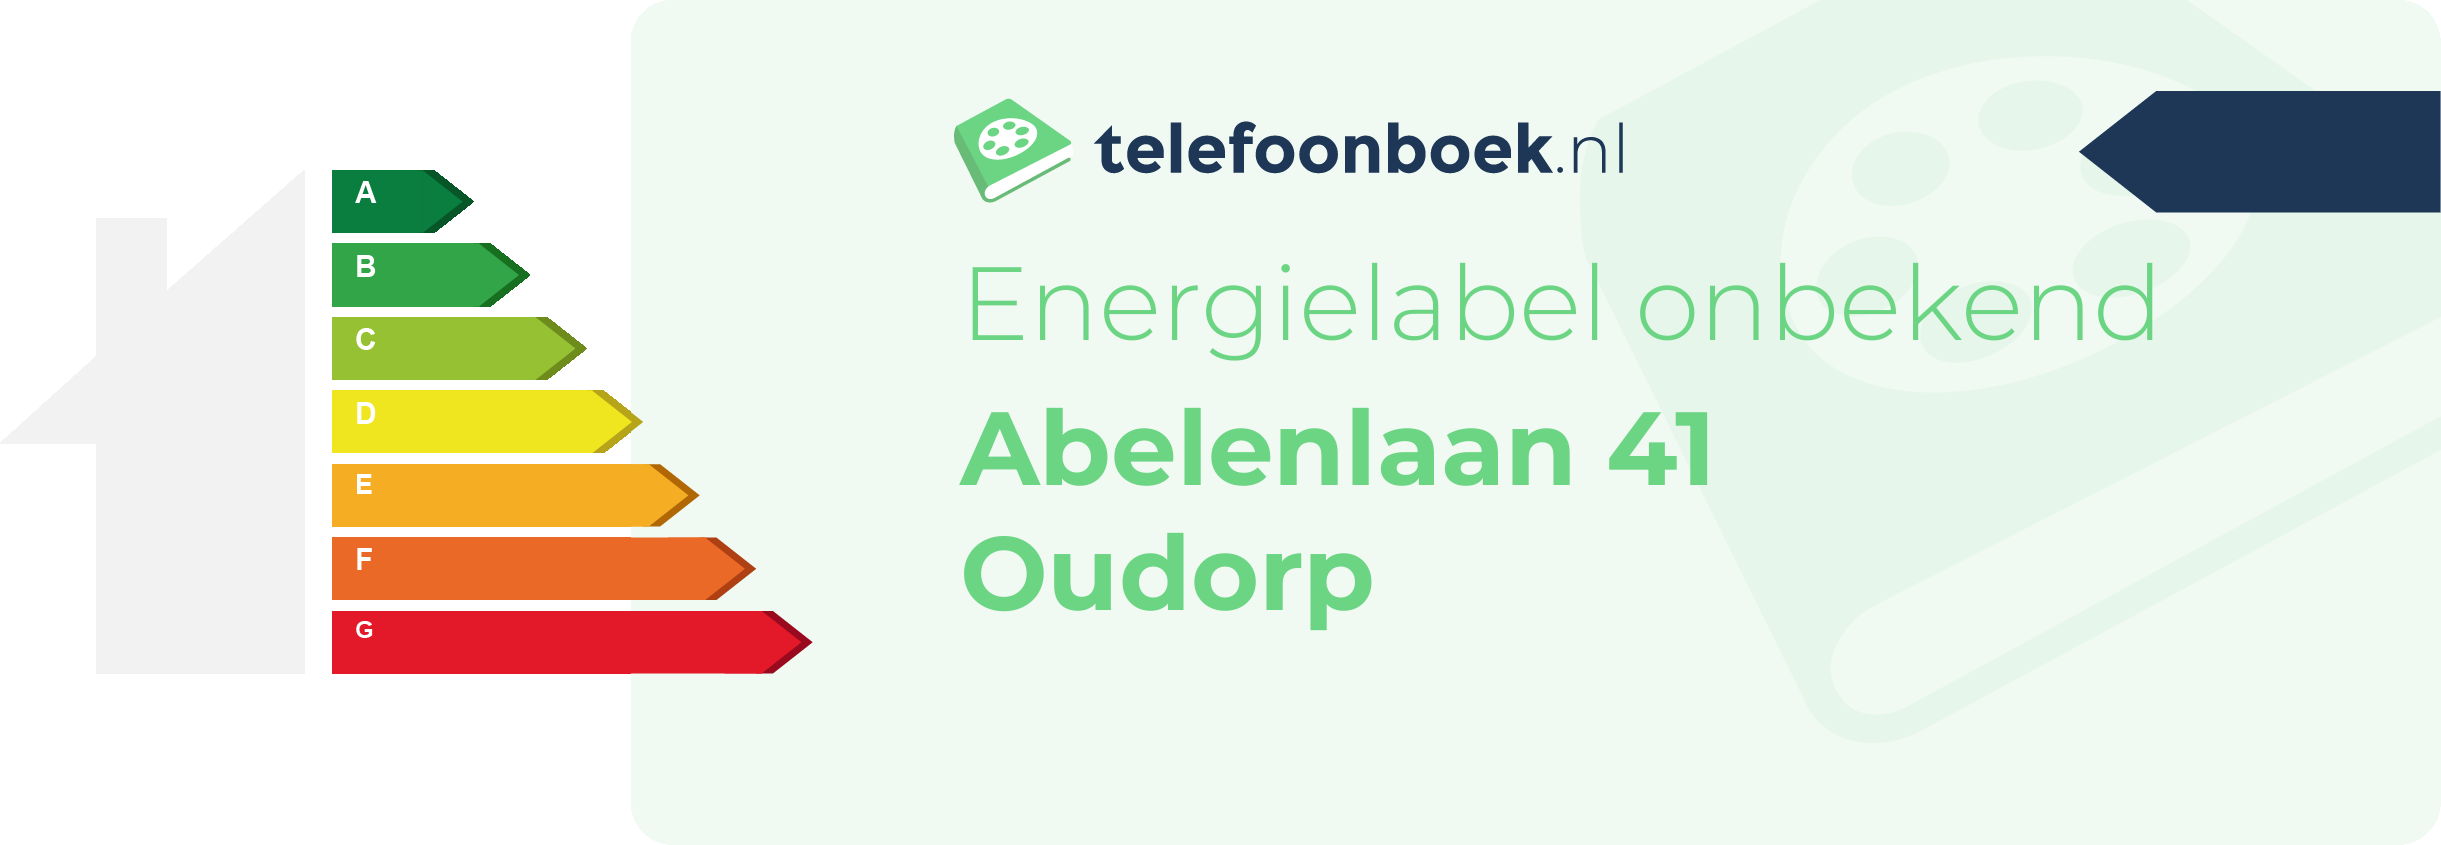 Energielabel Abelenlaan 41 Oudorp